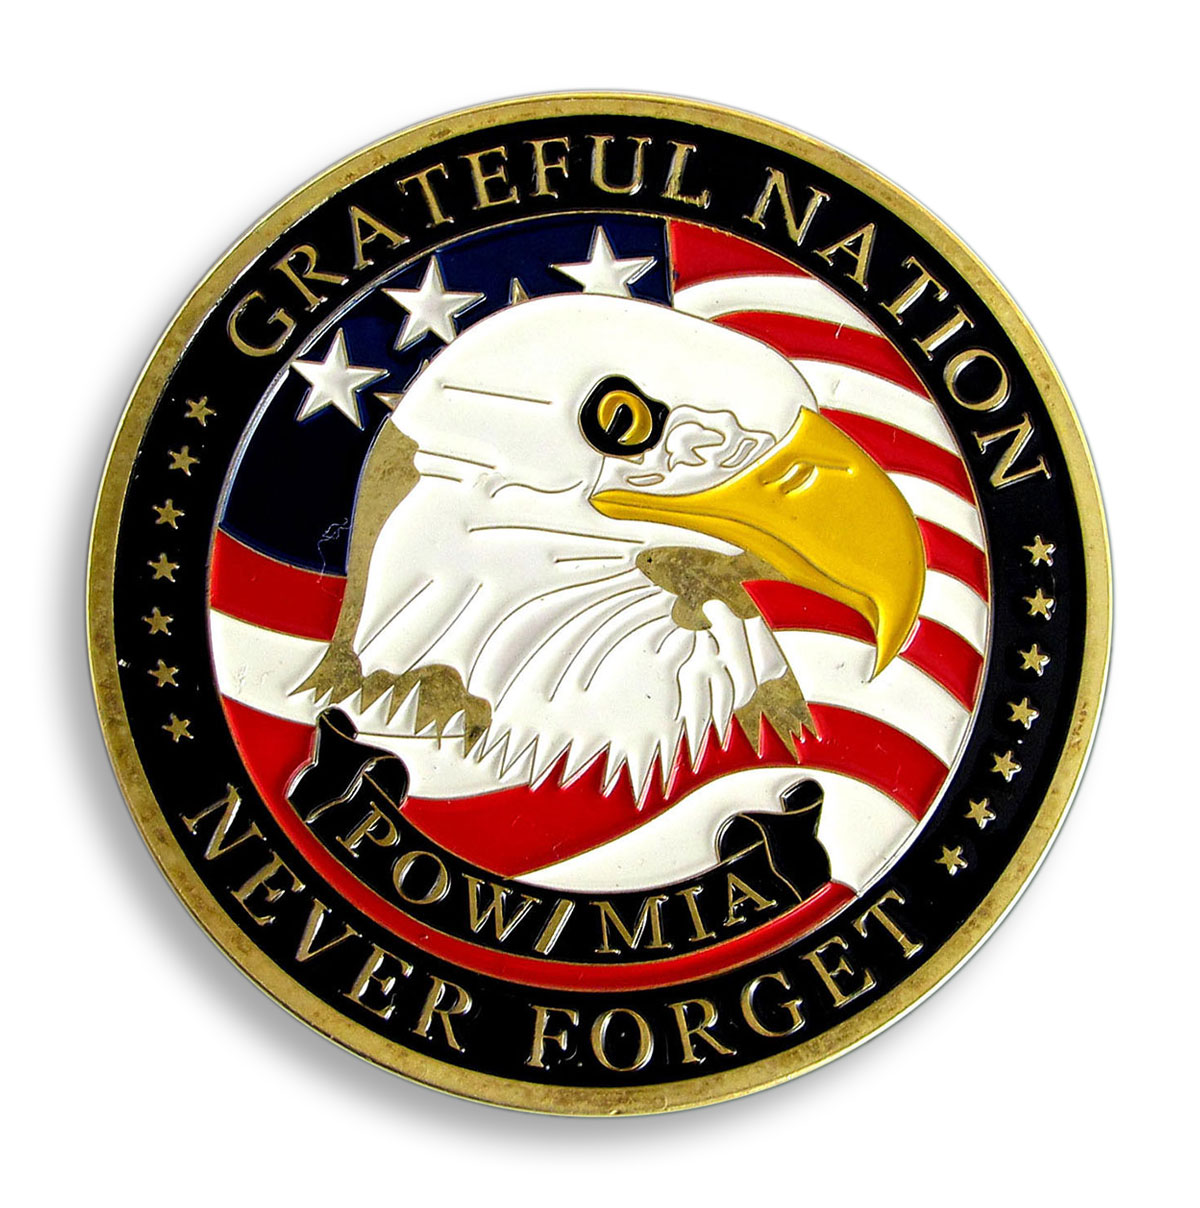 US Army, Militarty, Eagle, POW/MIA, Medal, War, NAVY, HONOR, Soldiers, Souvenir